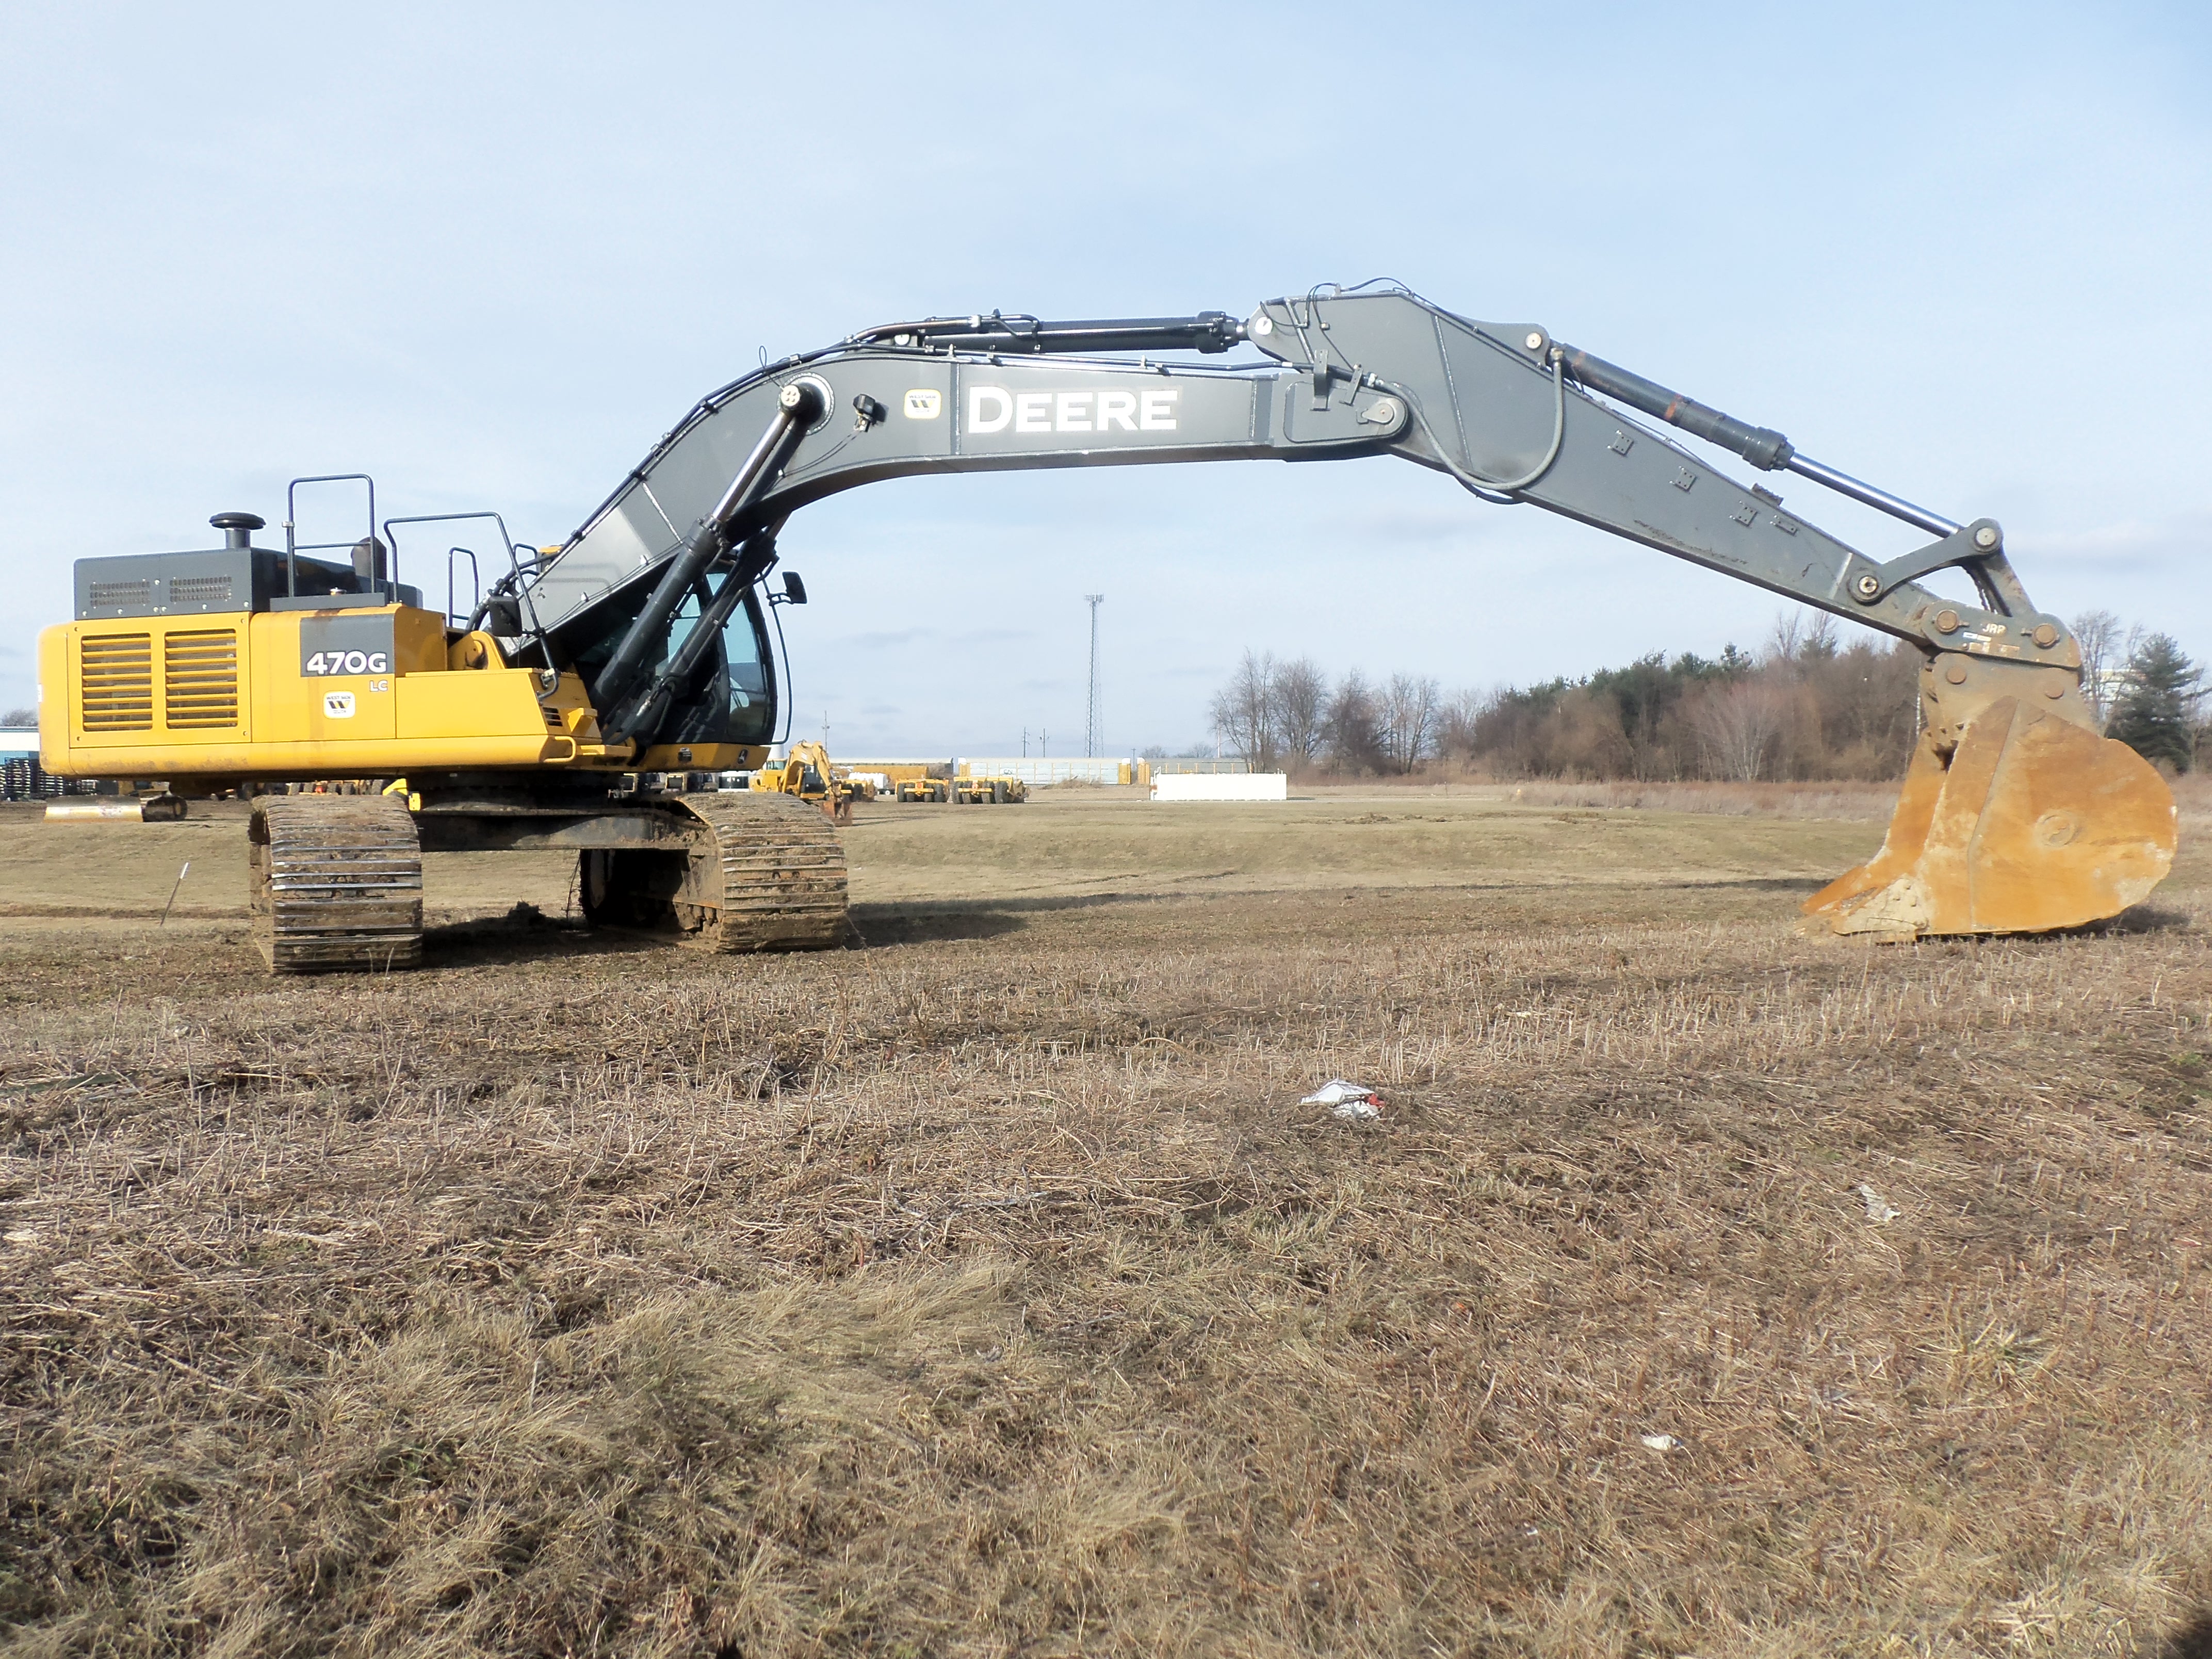 John Deere 470G LC excavator | Steele | Pinterest